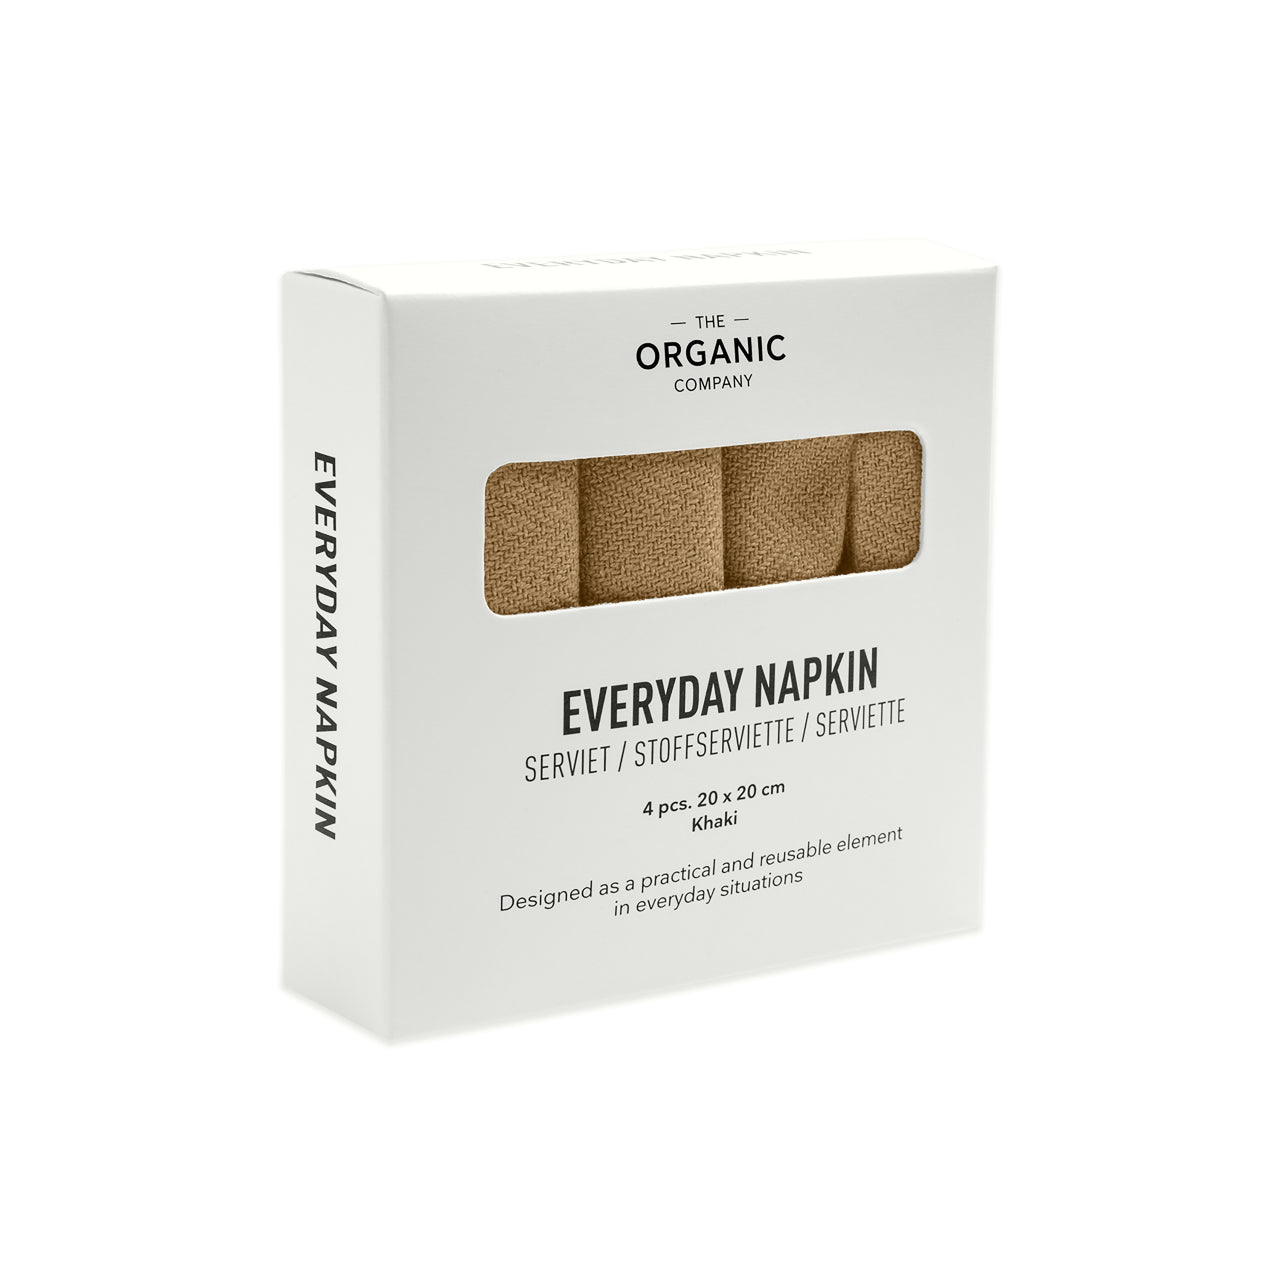 Stofservietter Everyday Napkin 4 pack Khaki fra The Organic Company, Oliviers & Co